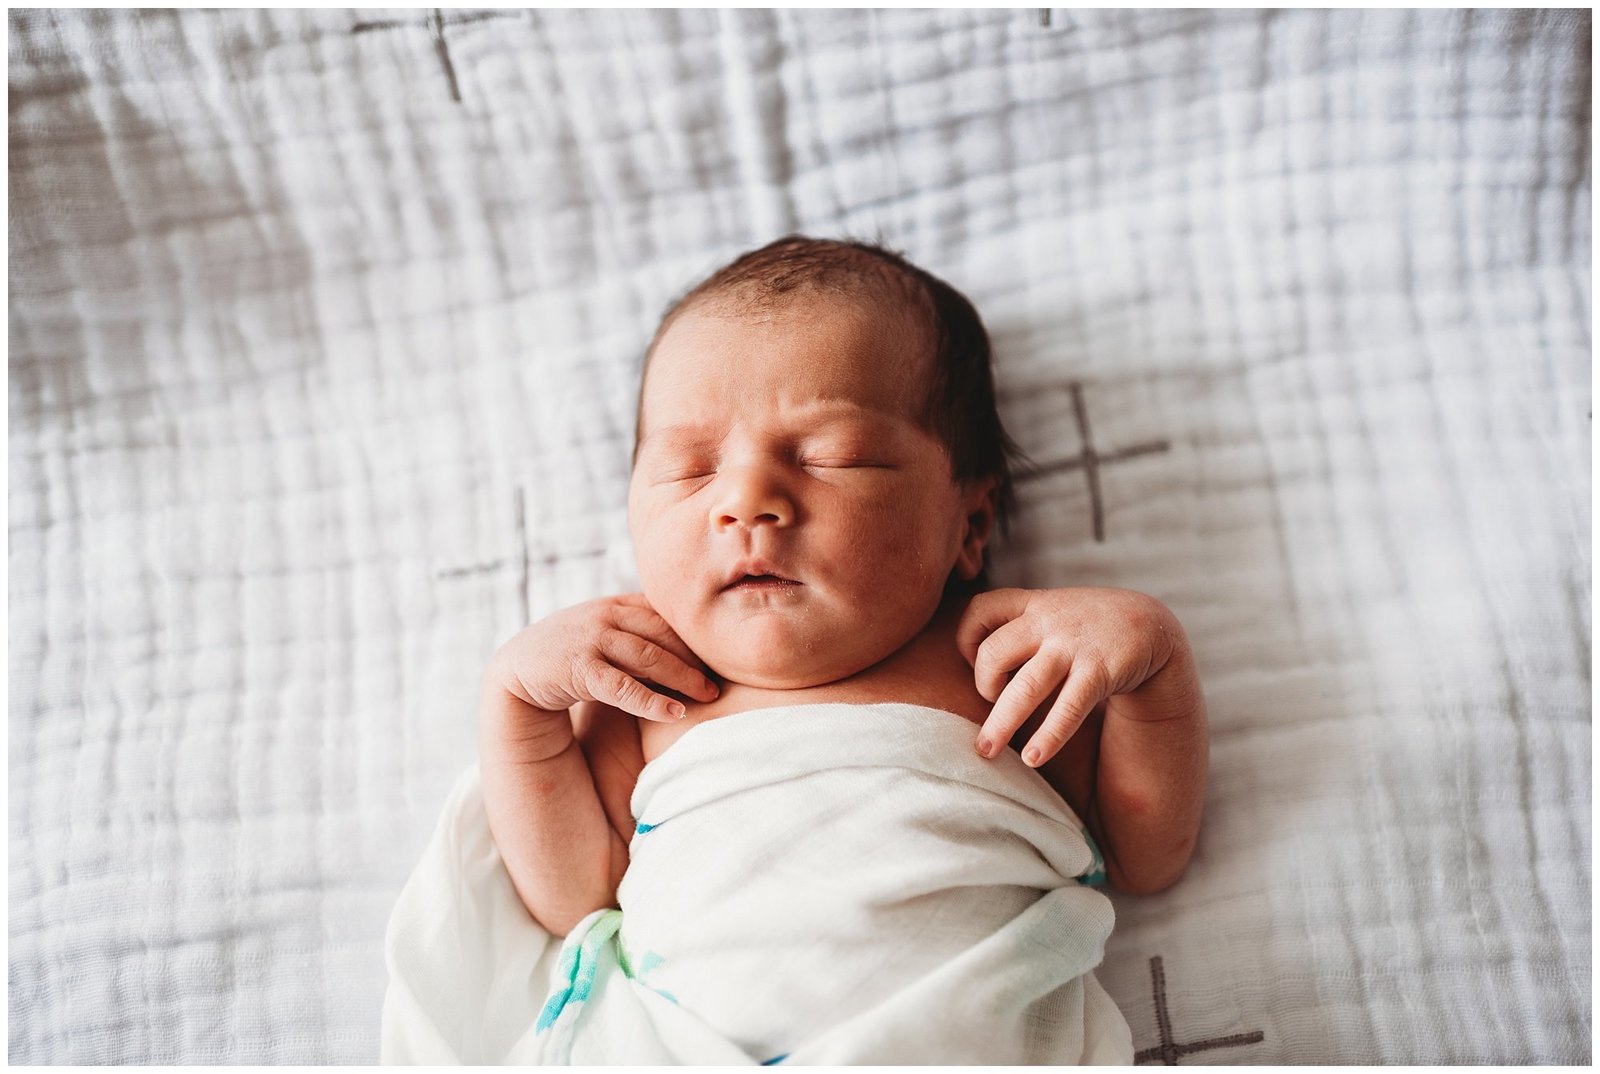 newborn baby boy fresh 48 in hospital photo session seattle area photographer emily ann photography